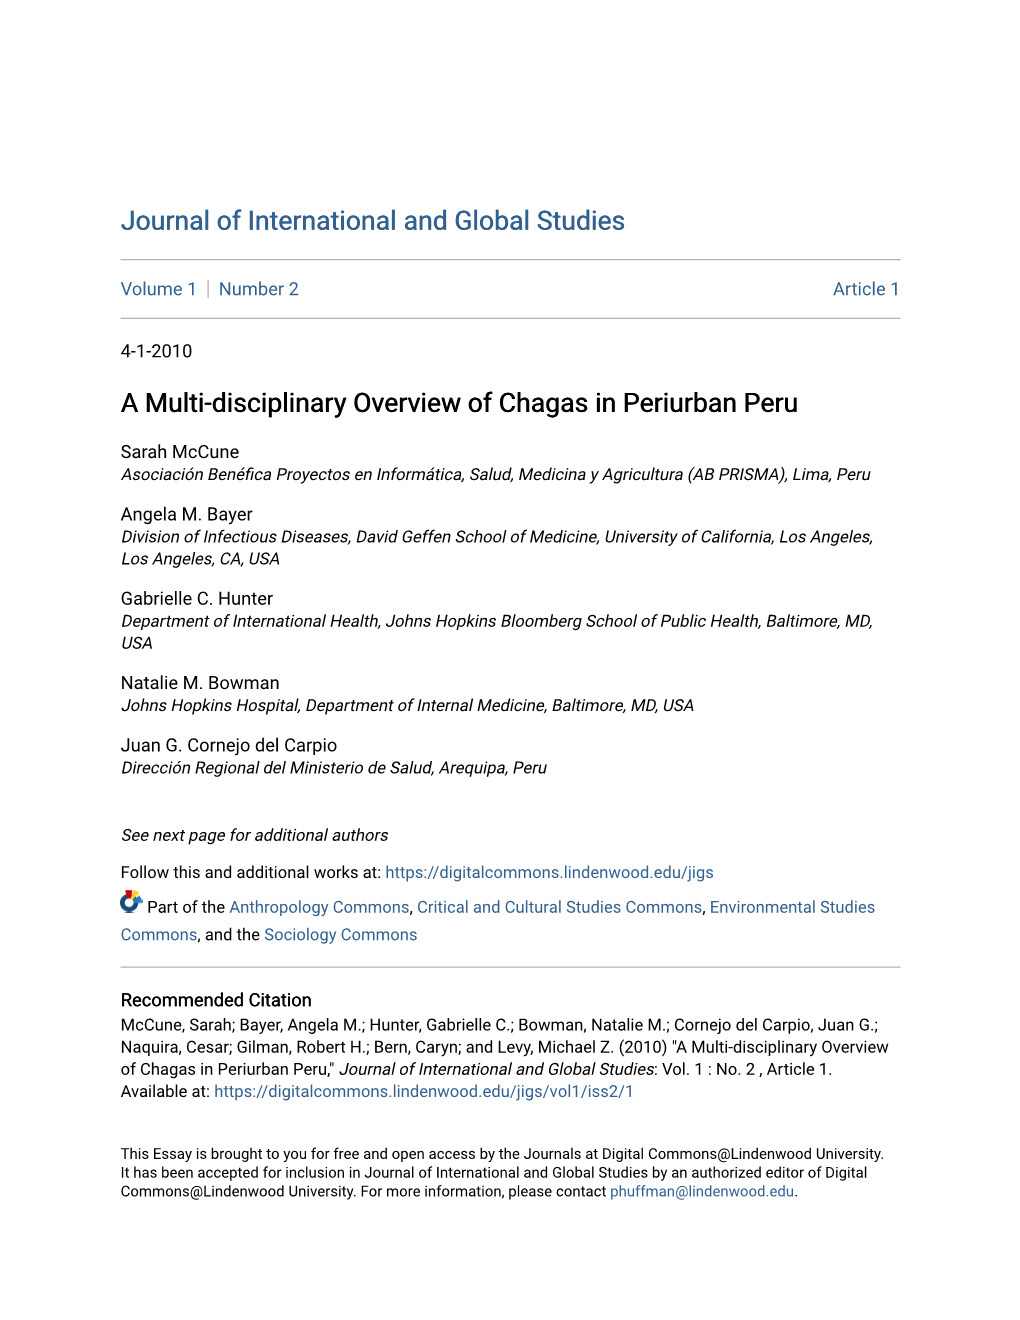 A Multi-Disciplinary Overview of Chagas in Periurban Peru